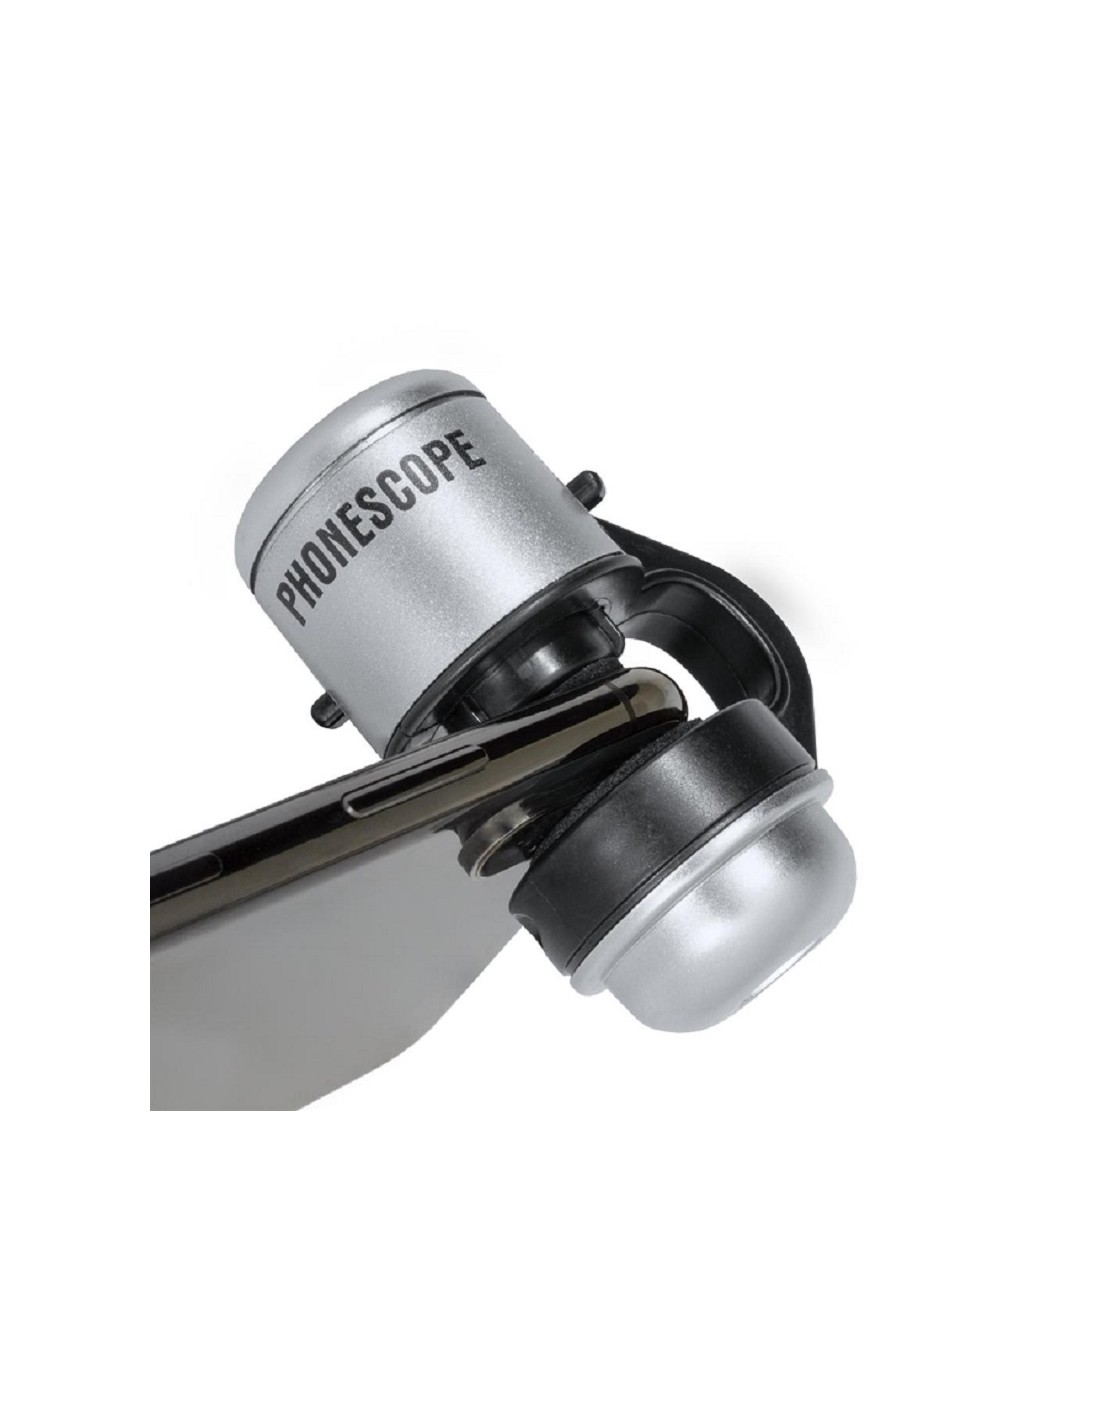 Microscope loupe x30 - Phonescope